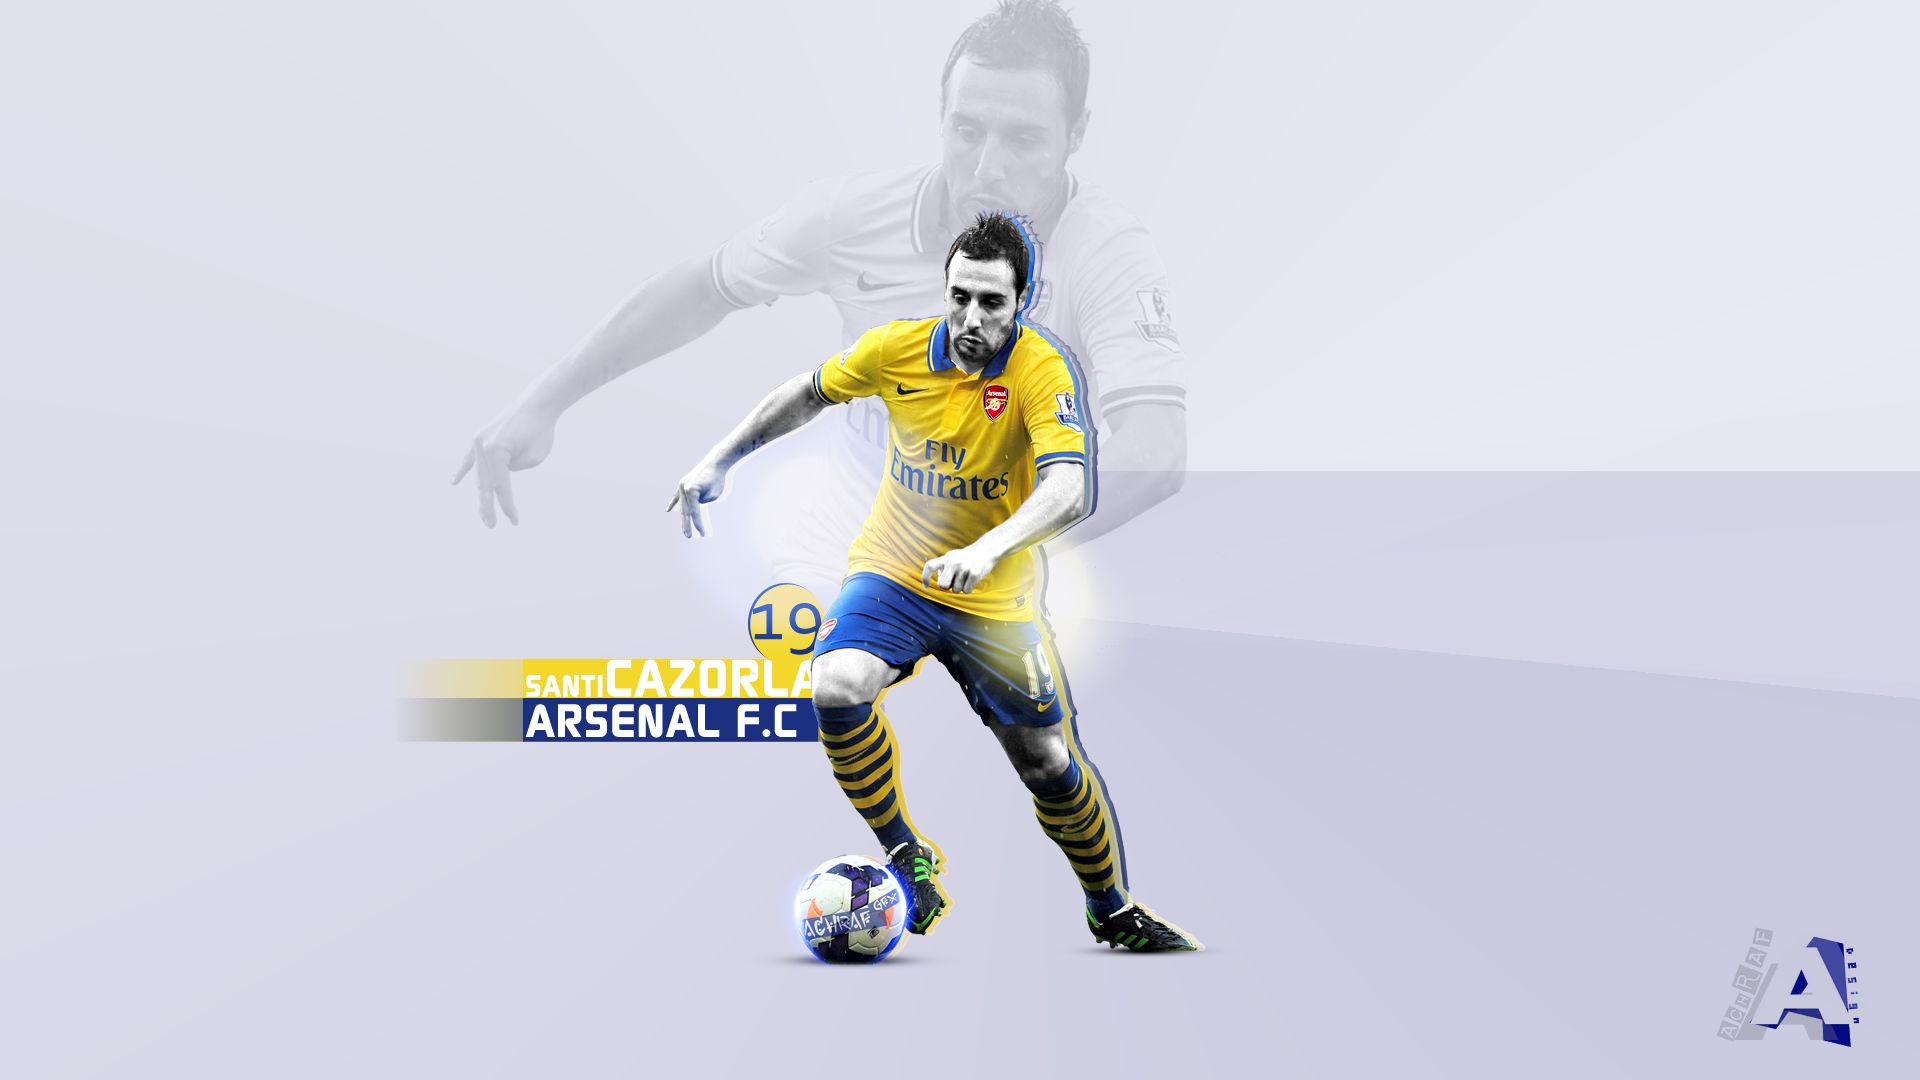 Descarga gratuita de fondo de pantalla para móvil de Fútbol, Deporte, Arsenal Fc, Santi Cazorla.